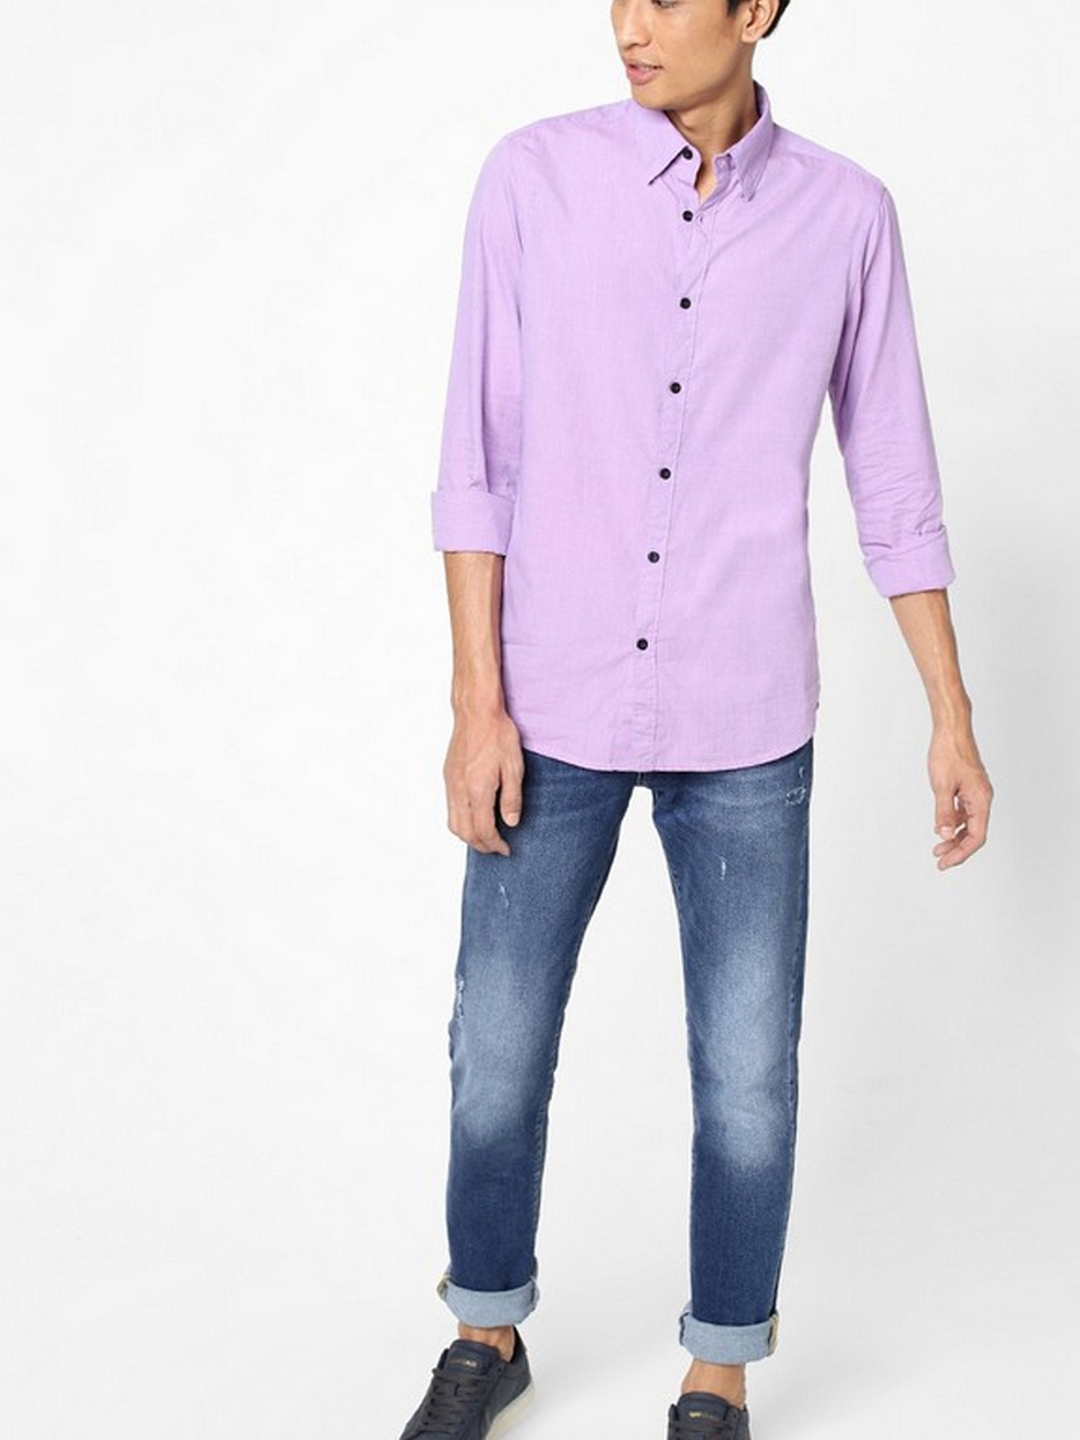 What colour shirt suits a purple hoodie? - Quora